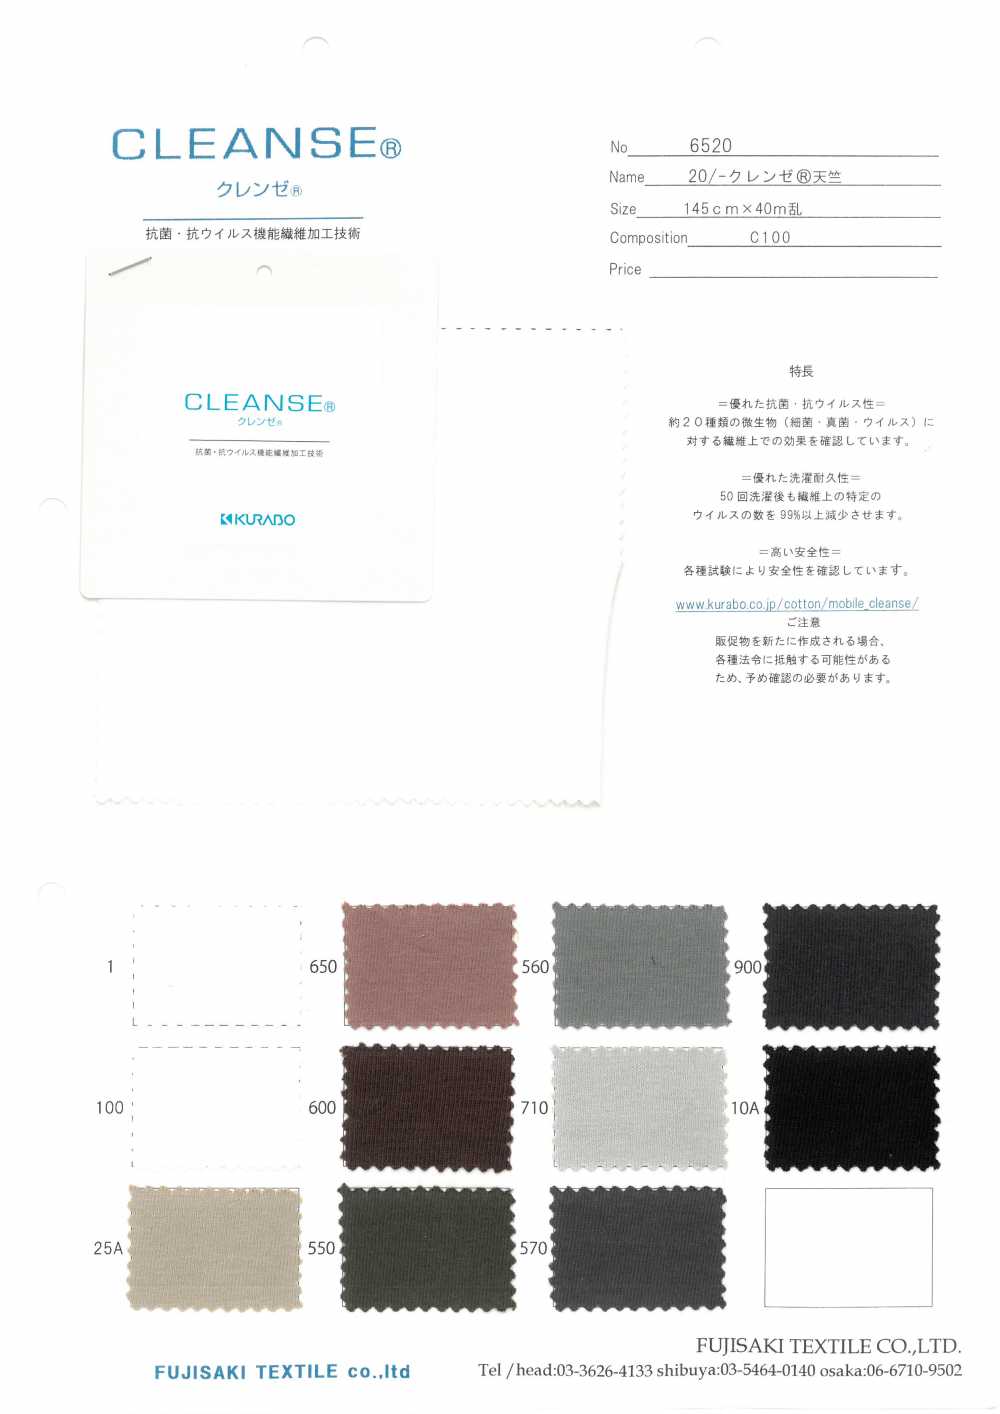 6520 20 / REINIGUNG Tianzhu Baumwolle[Textilgewebe] Fujisaki Textile